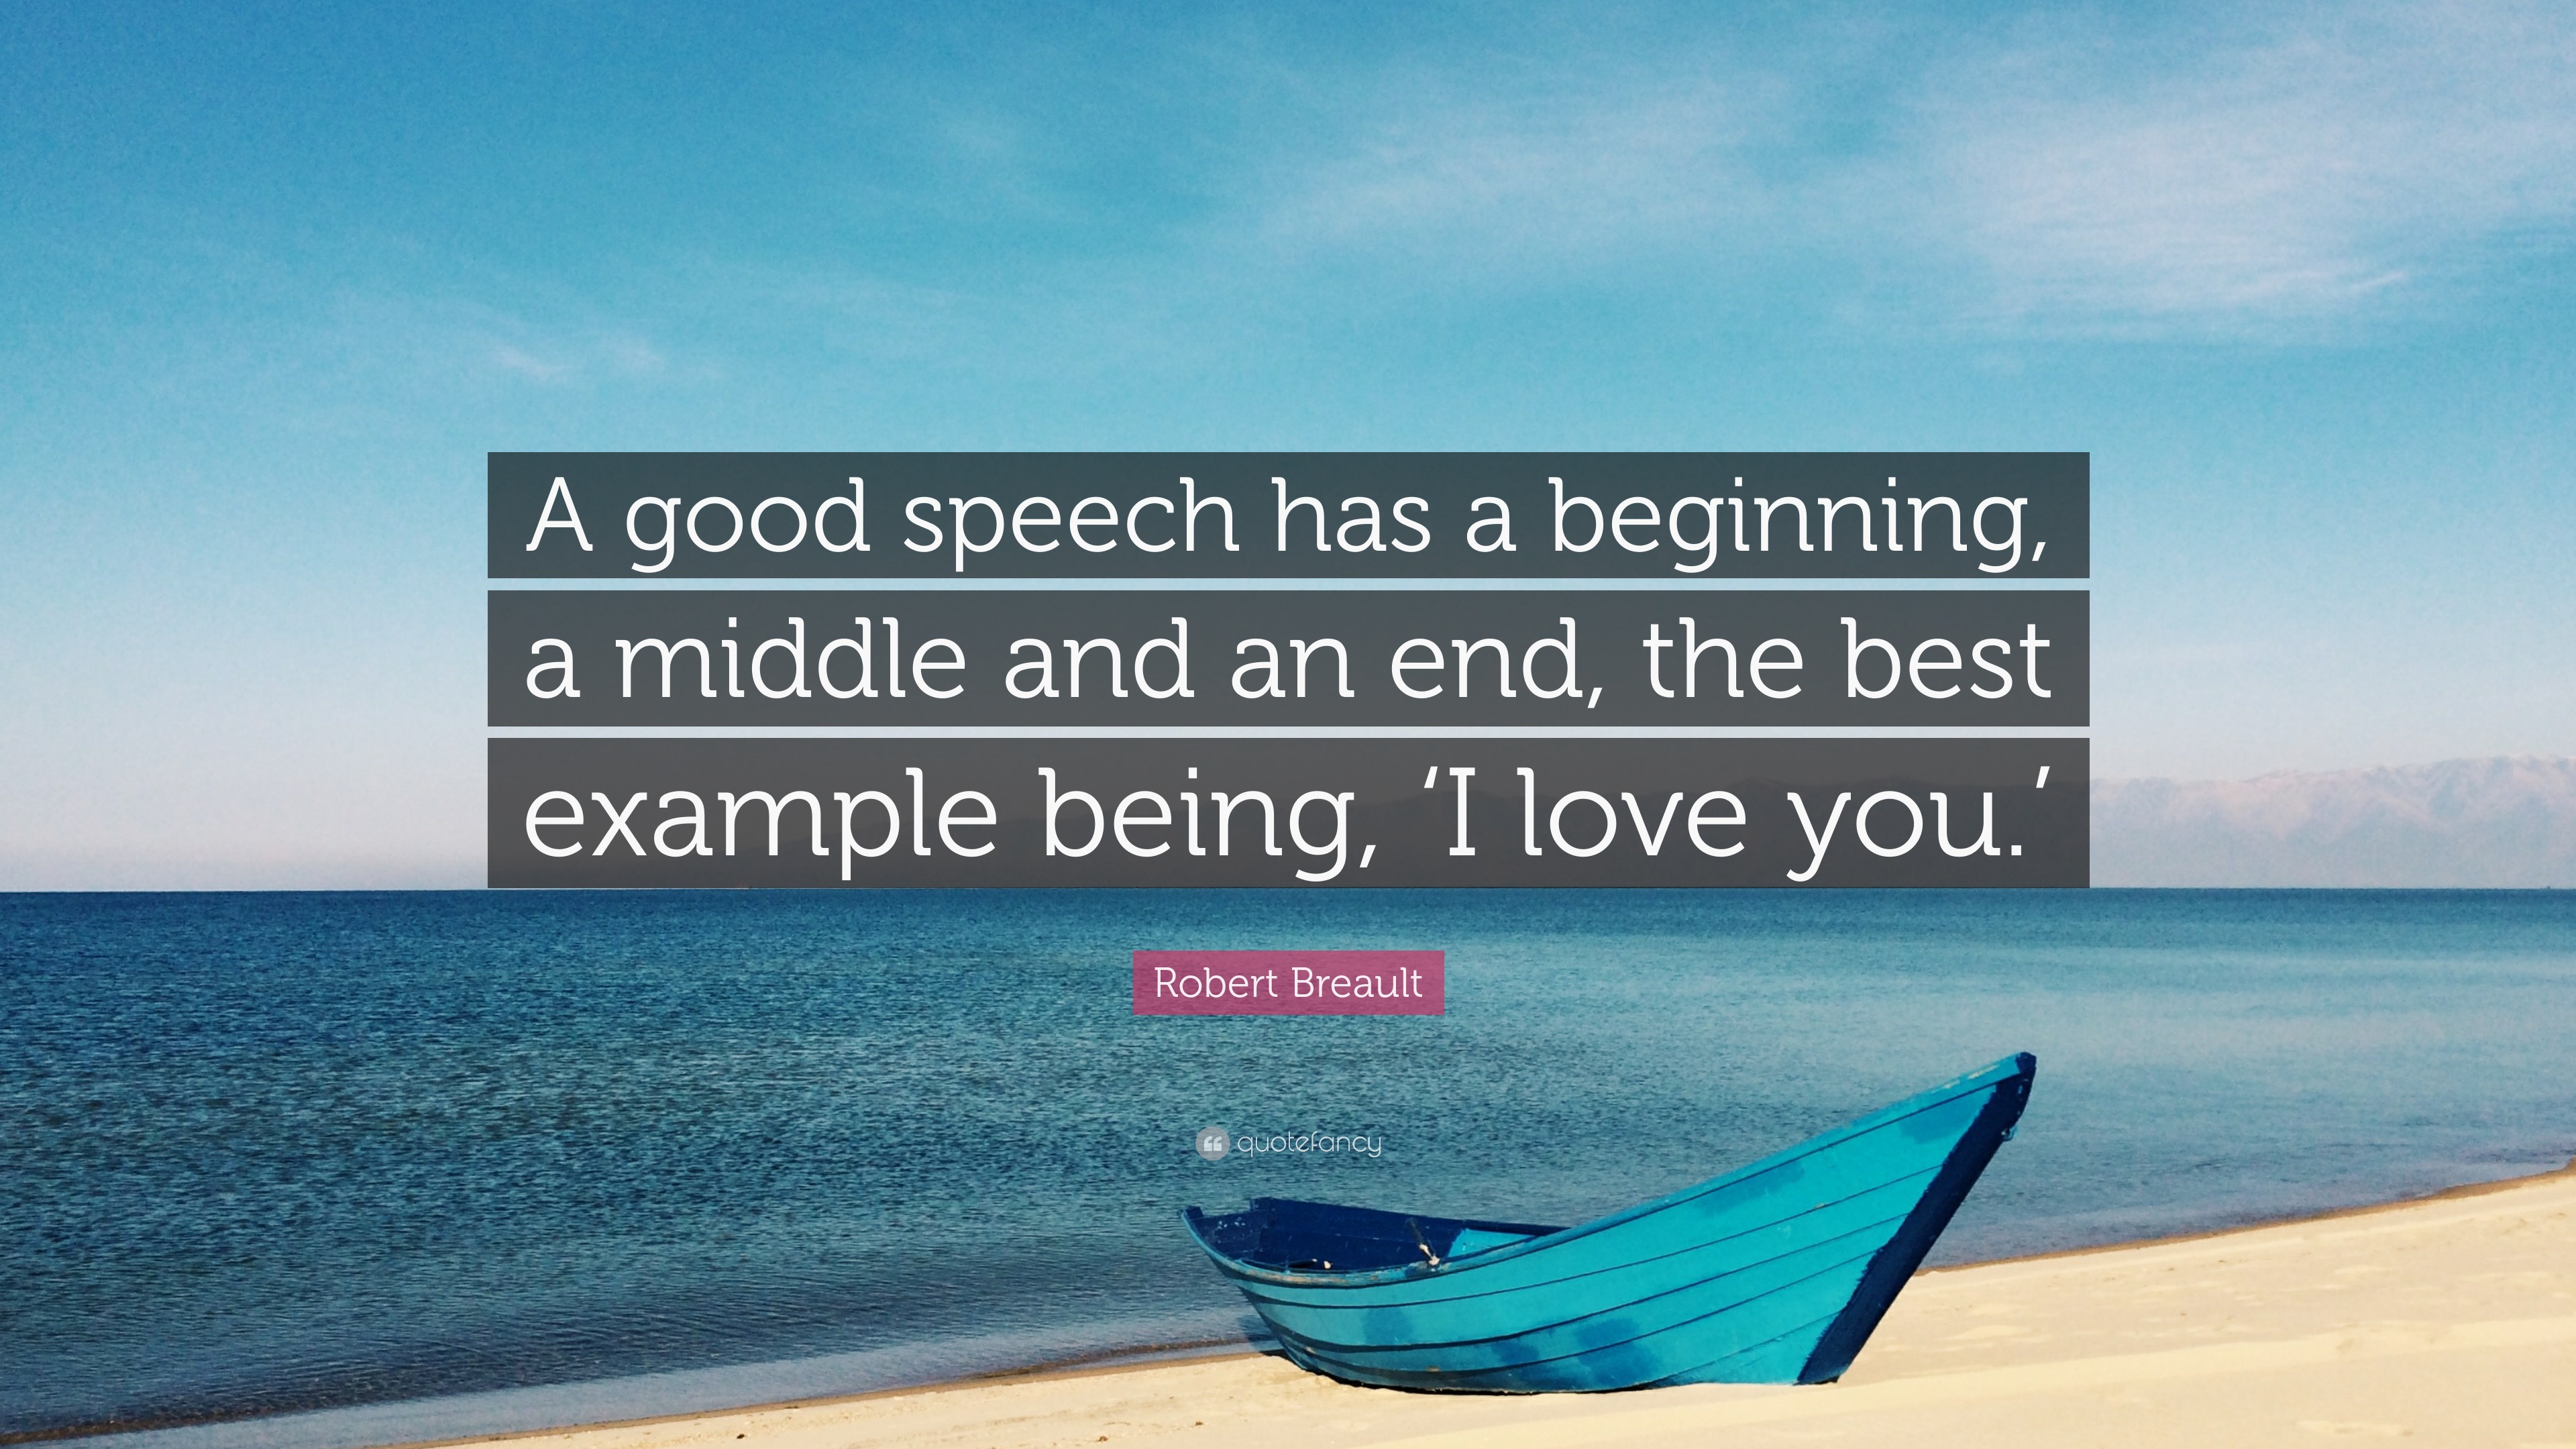 how to write good ending speech